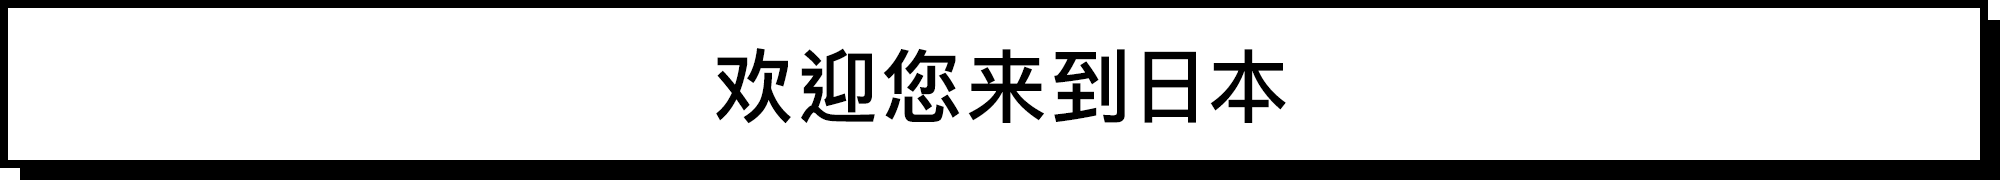 中国語title